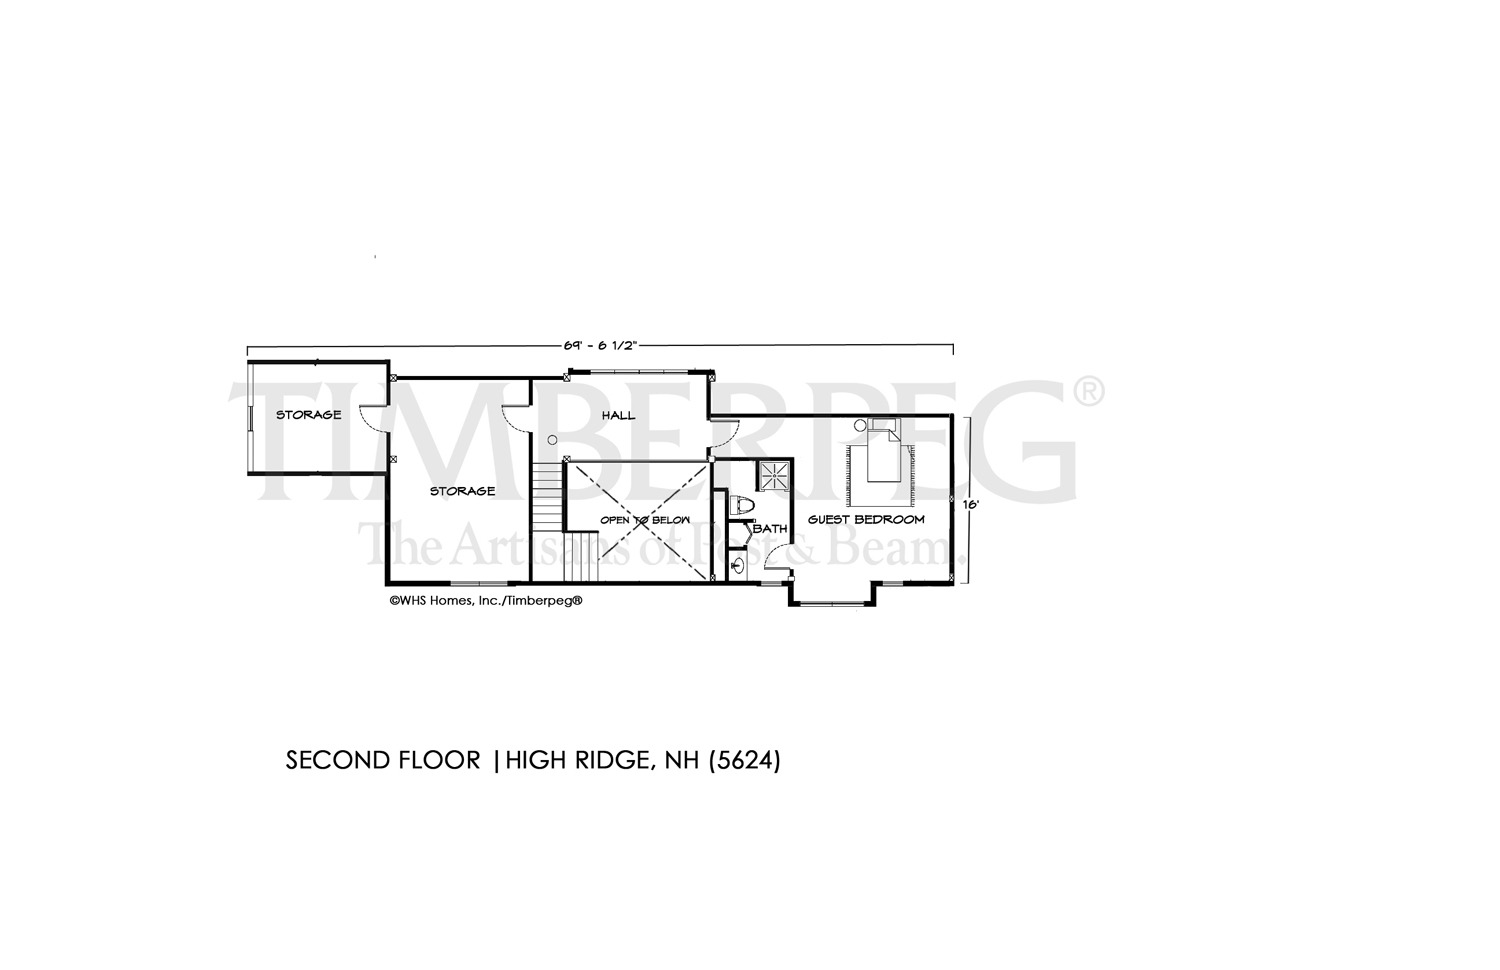 High Ridge, NH Second Floor Plan (5624)